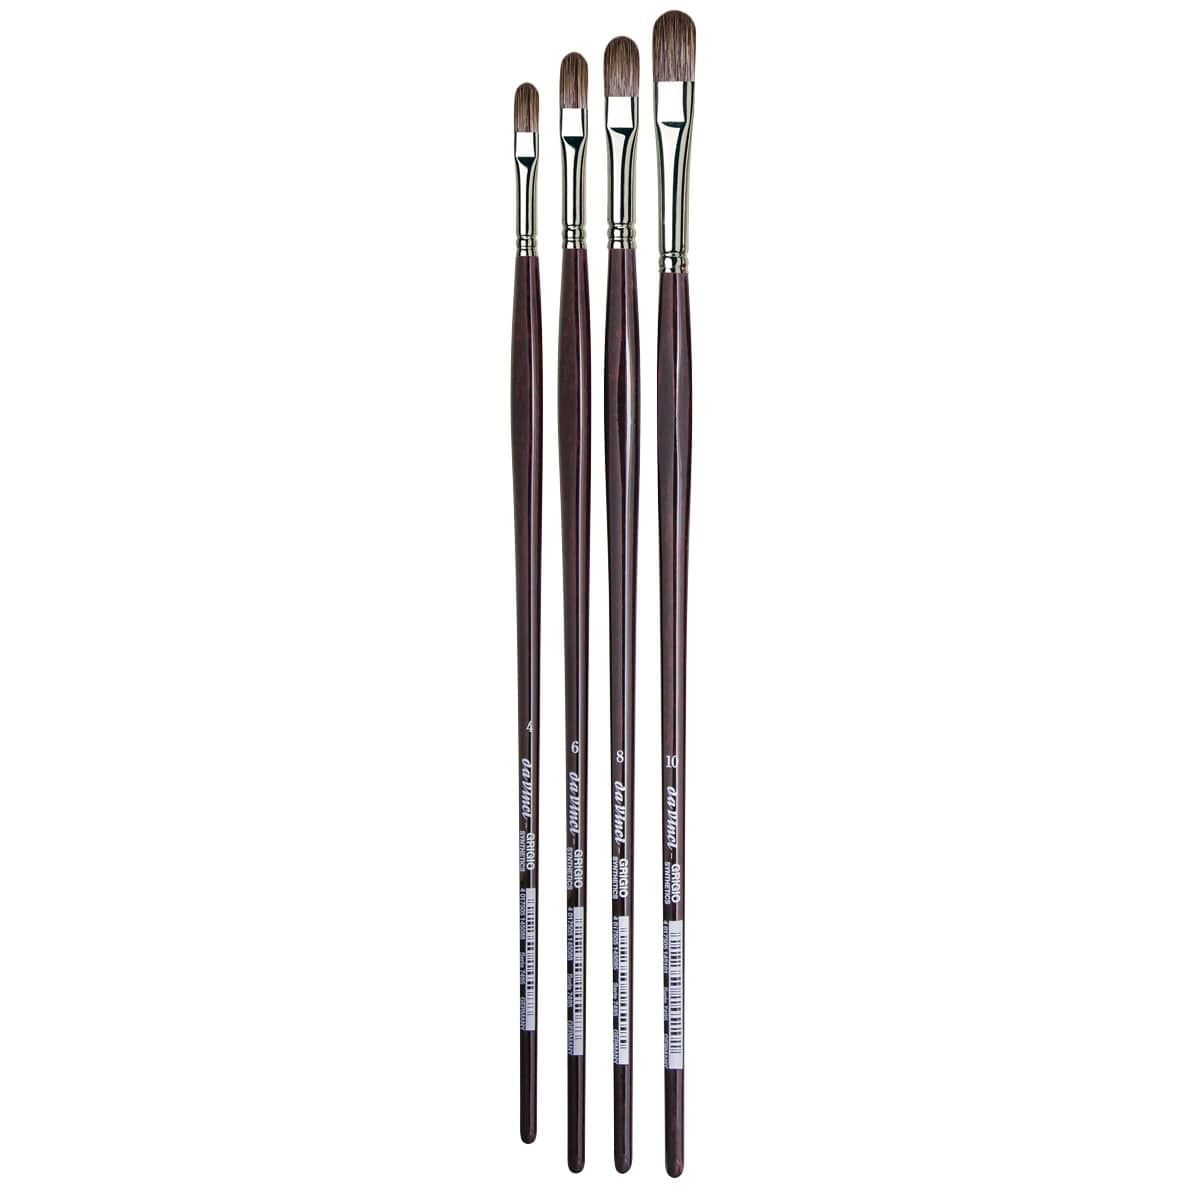 Da Vinci Grigio Series 7495 New Wave Synthetic Filbert Brush Set of 4